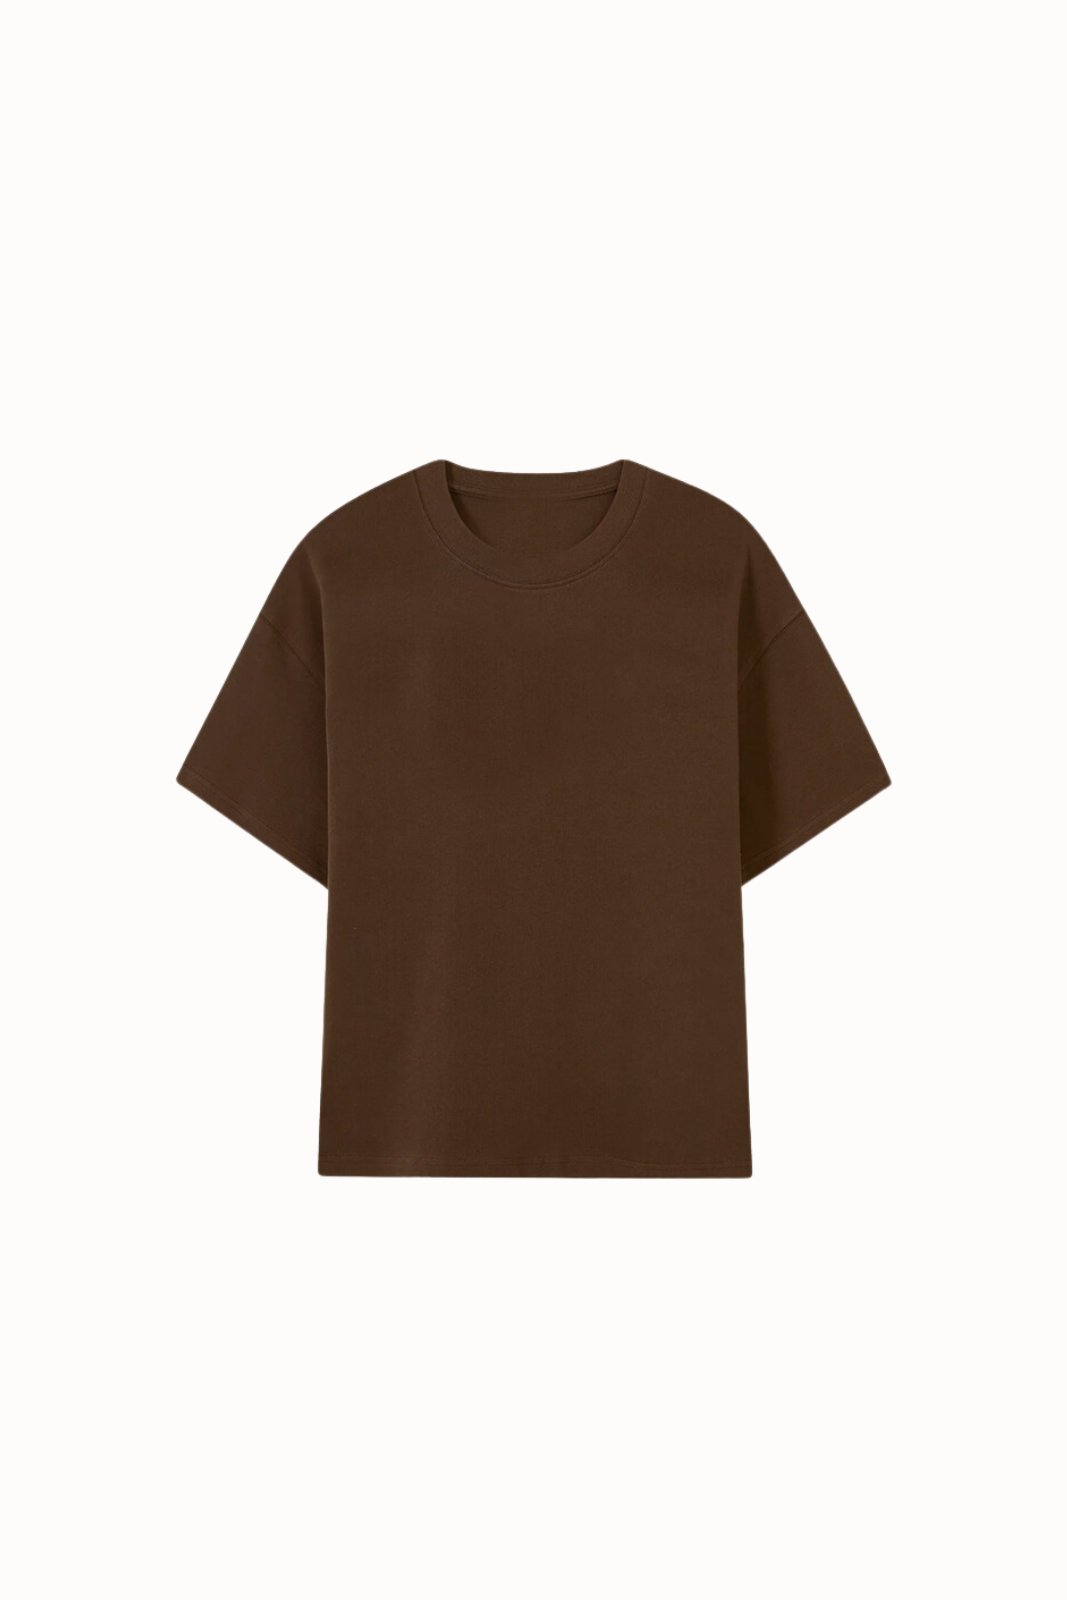 The Plains T-Shirt V2 / Chestnut Brown